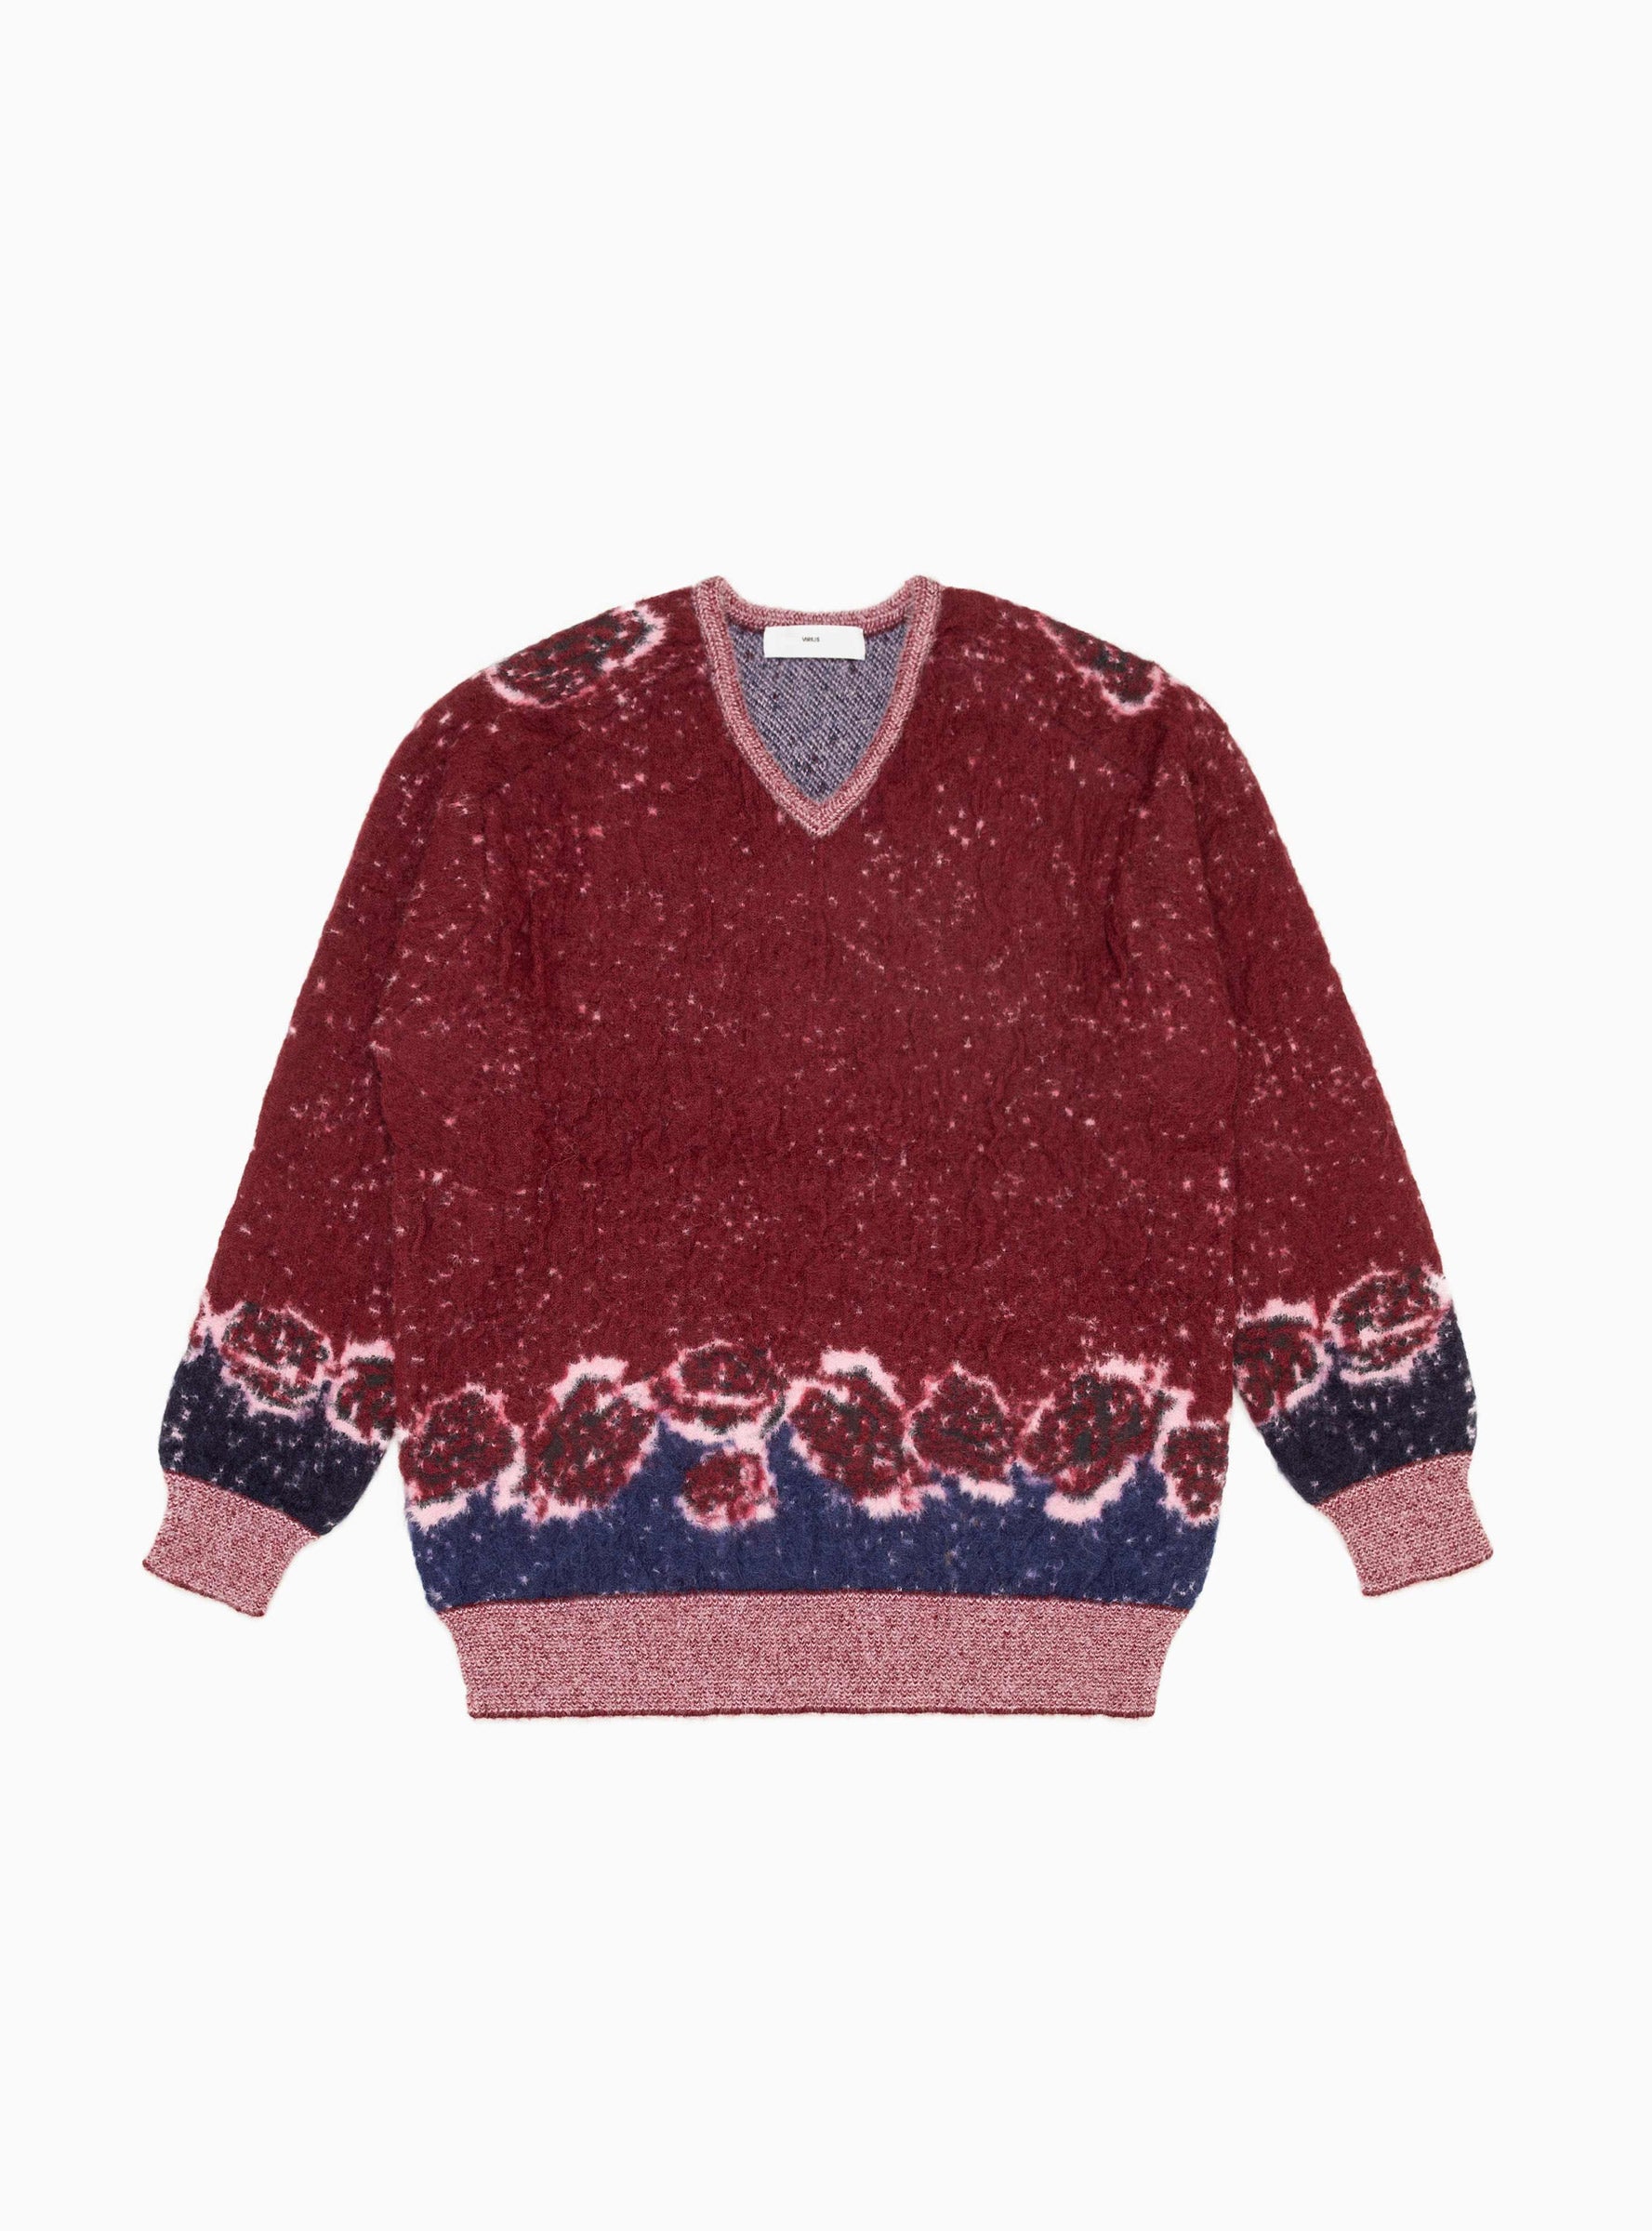 HERILL Cashmere Jacquard Sweater AHIRU